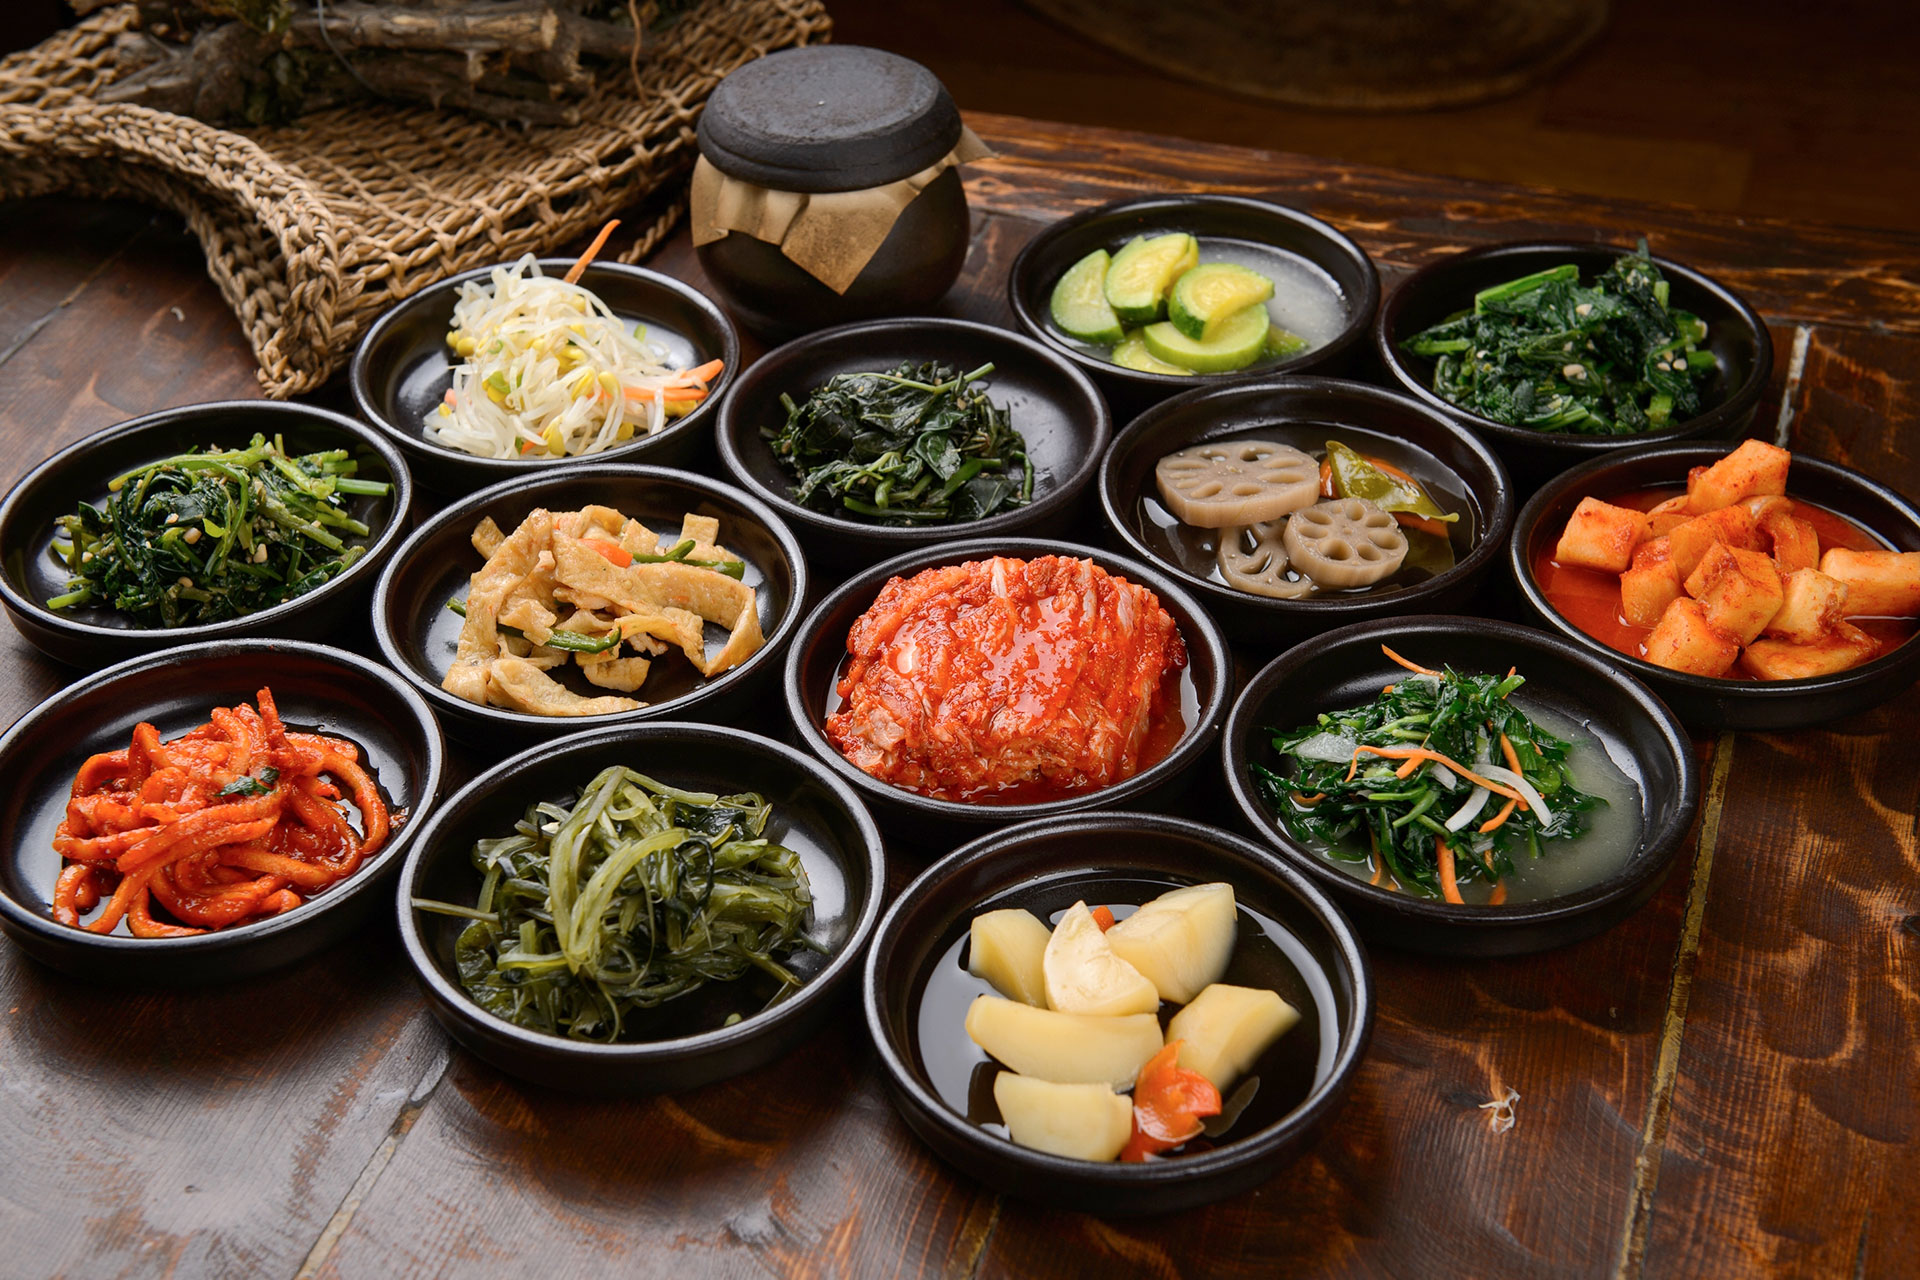 Korean Banchan: A Tableful of Yummy Goodies